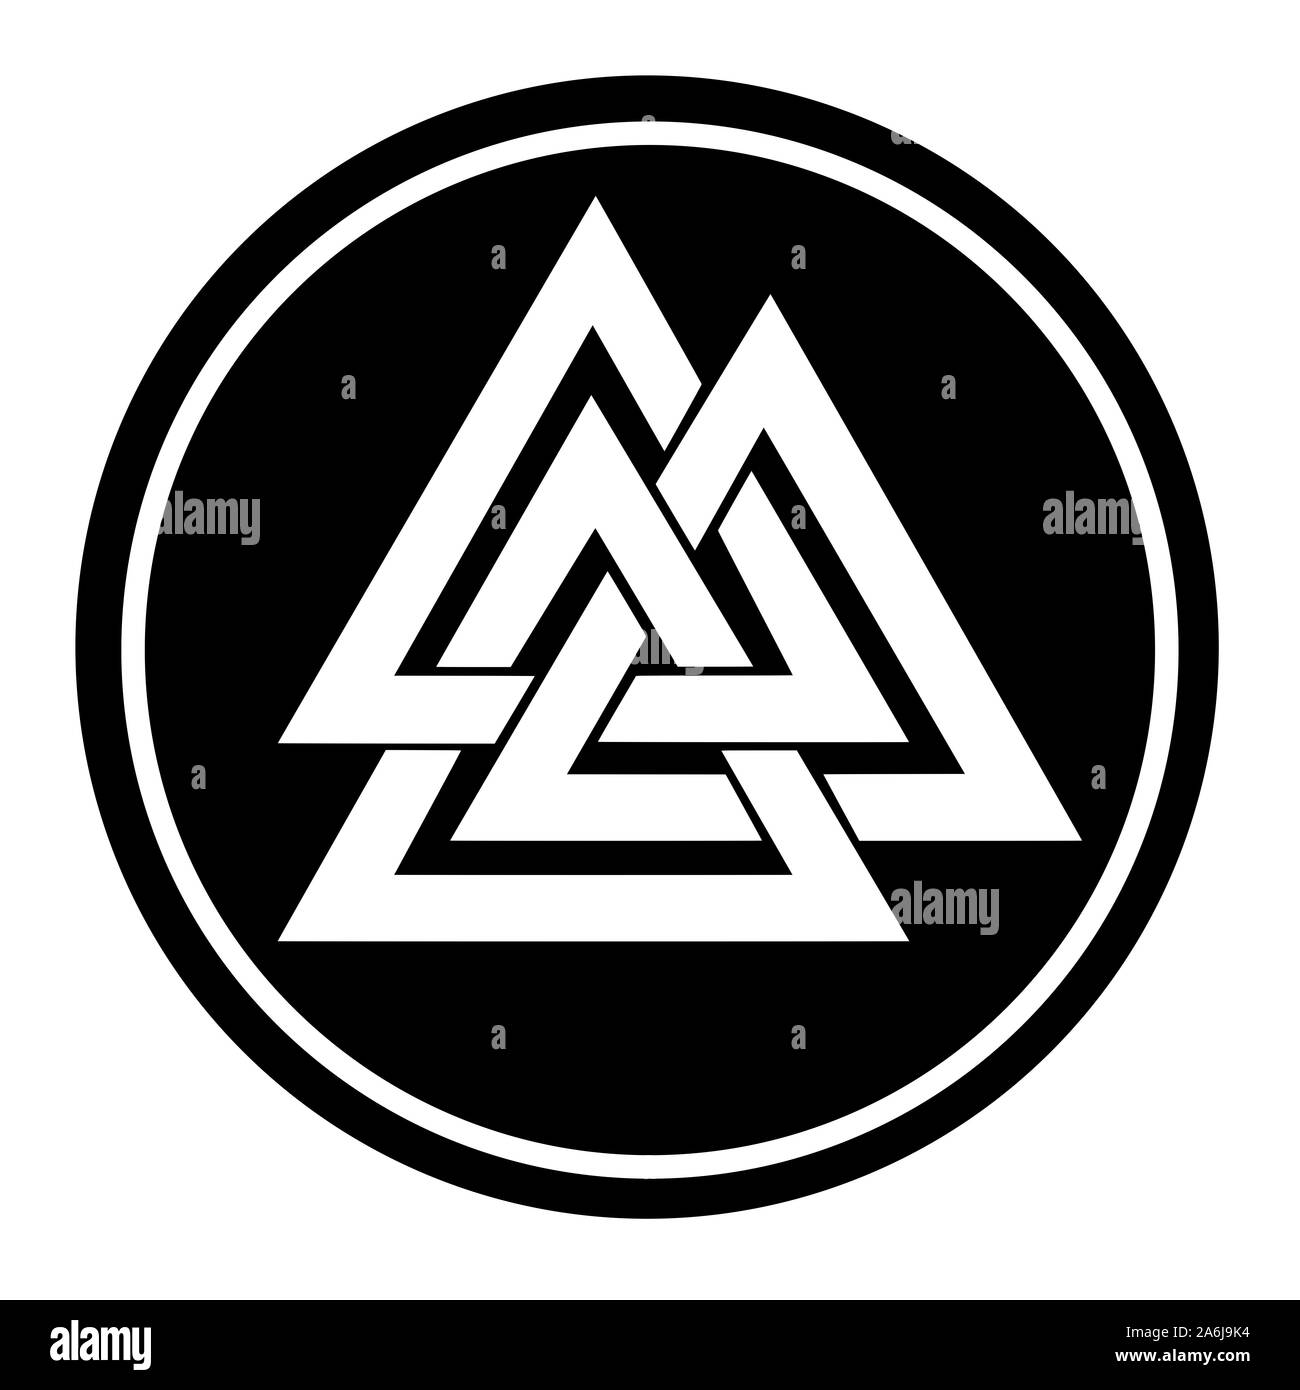 Valknut symbol in a black circle Stock Photo